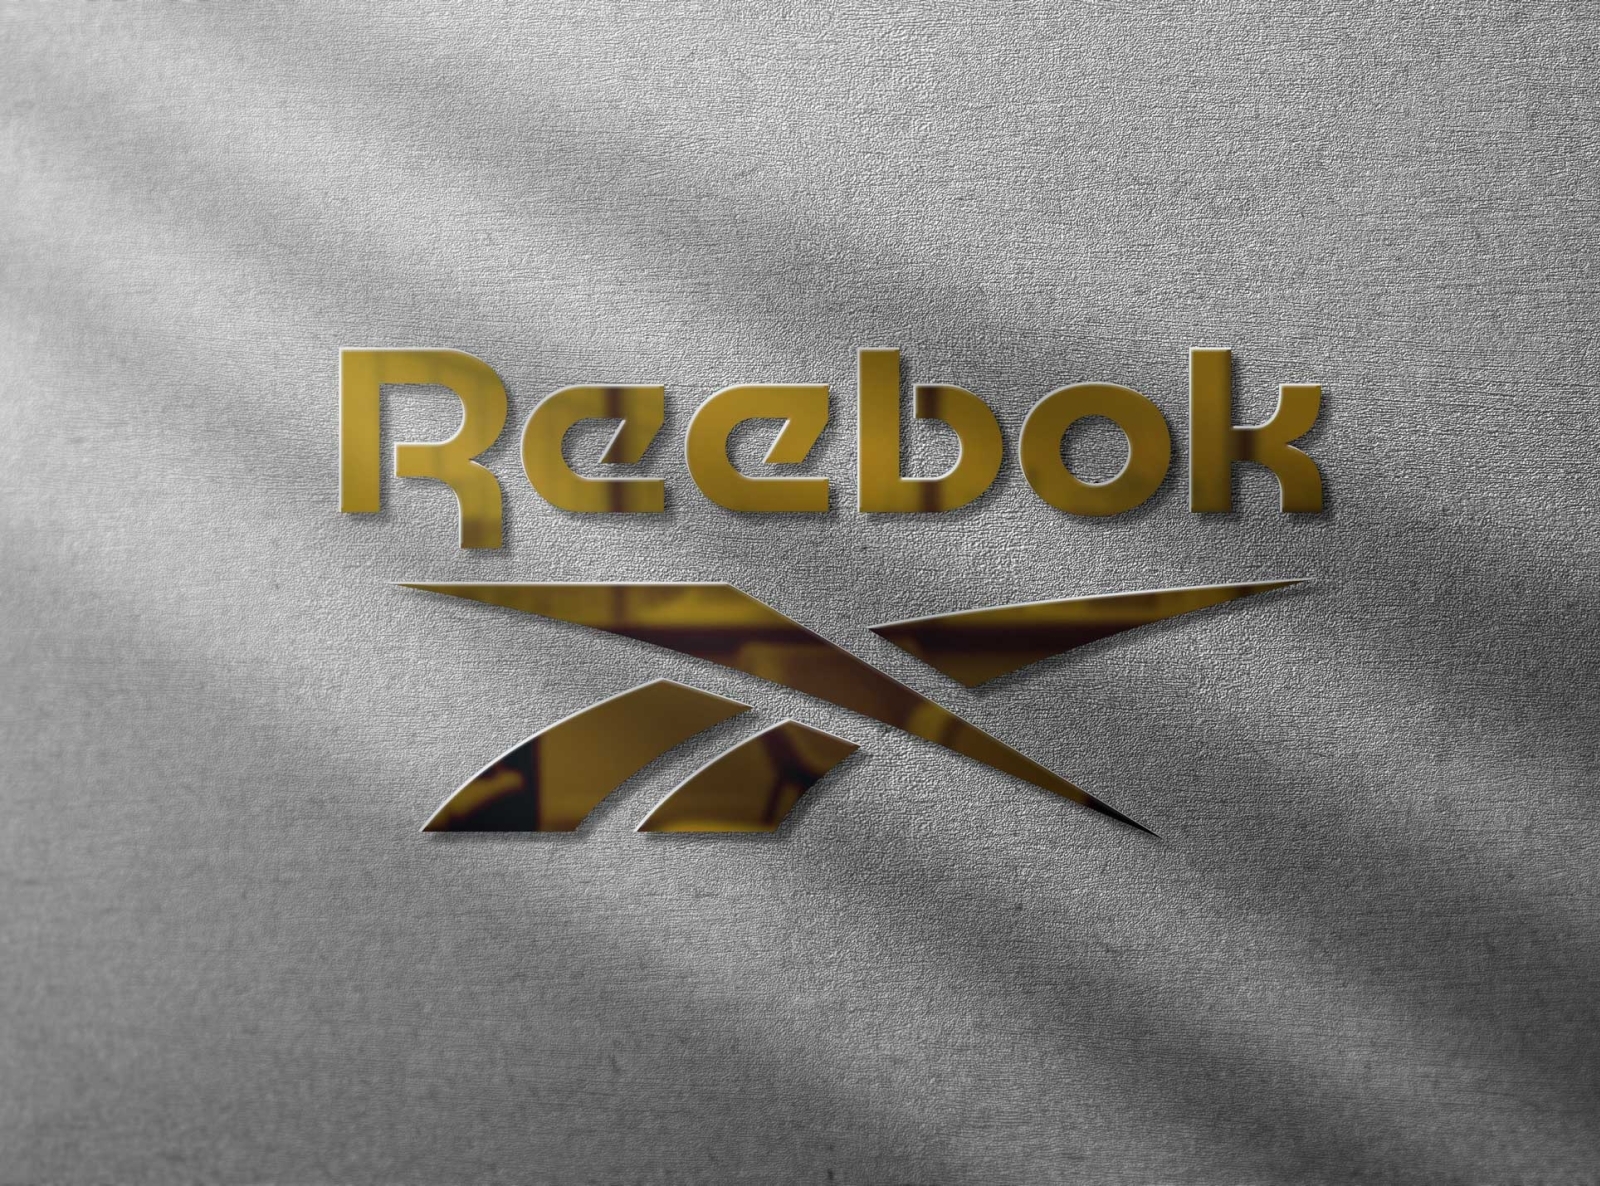 3d gold logo mockup - pbbxe